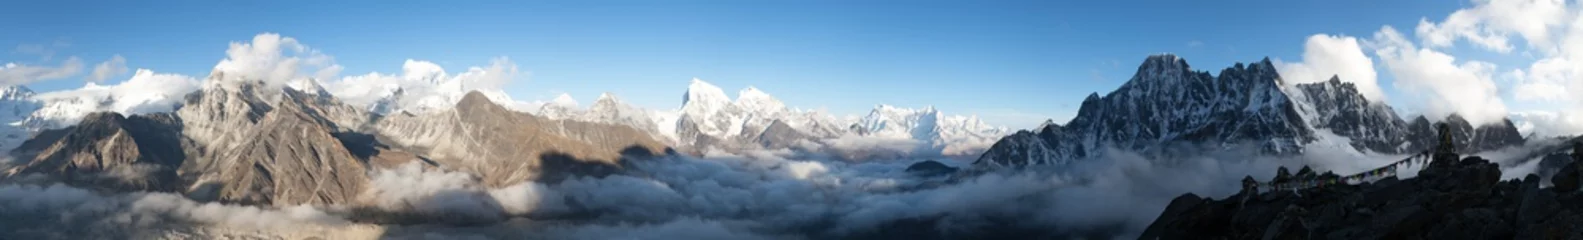 Fototapete Cho Oyu Panorama des Mount Everest, Lhotse, Makalu und Cho Oyu